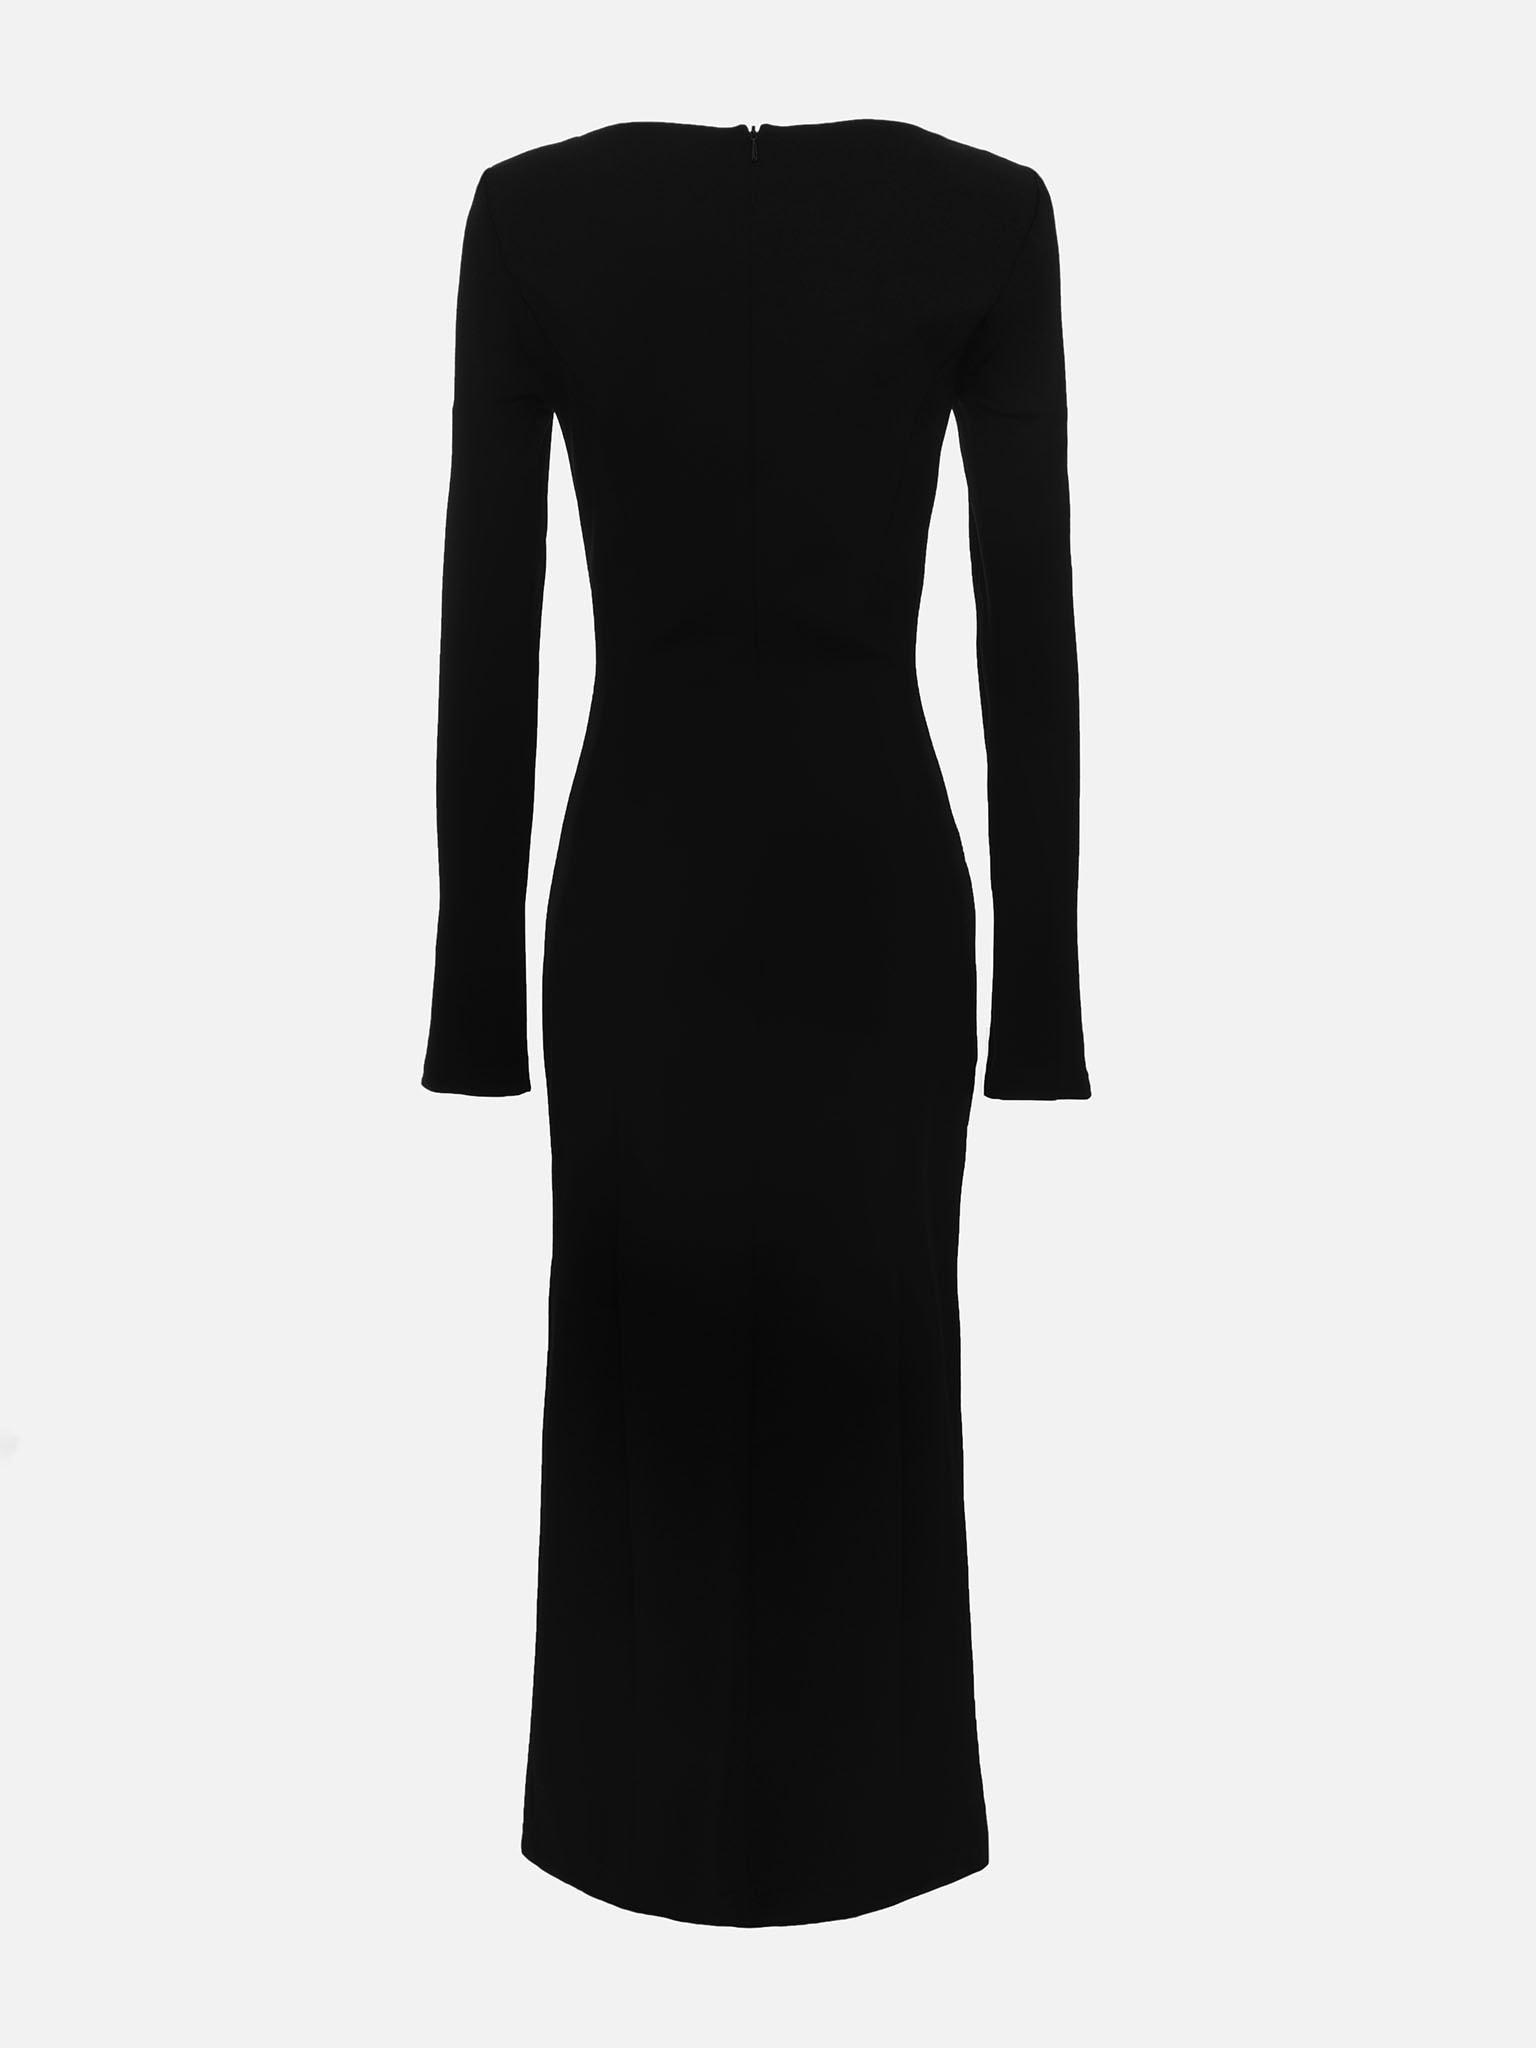 Fitted midi dress with square neckline :: LICHI - Online fashion store